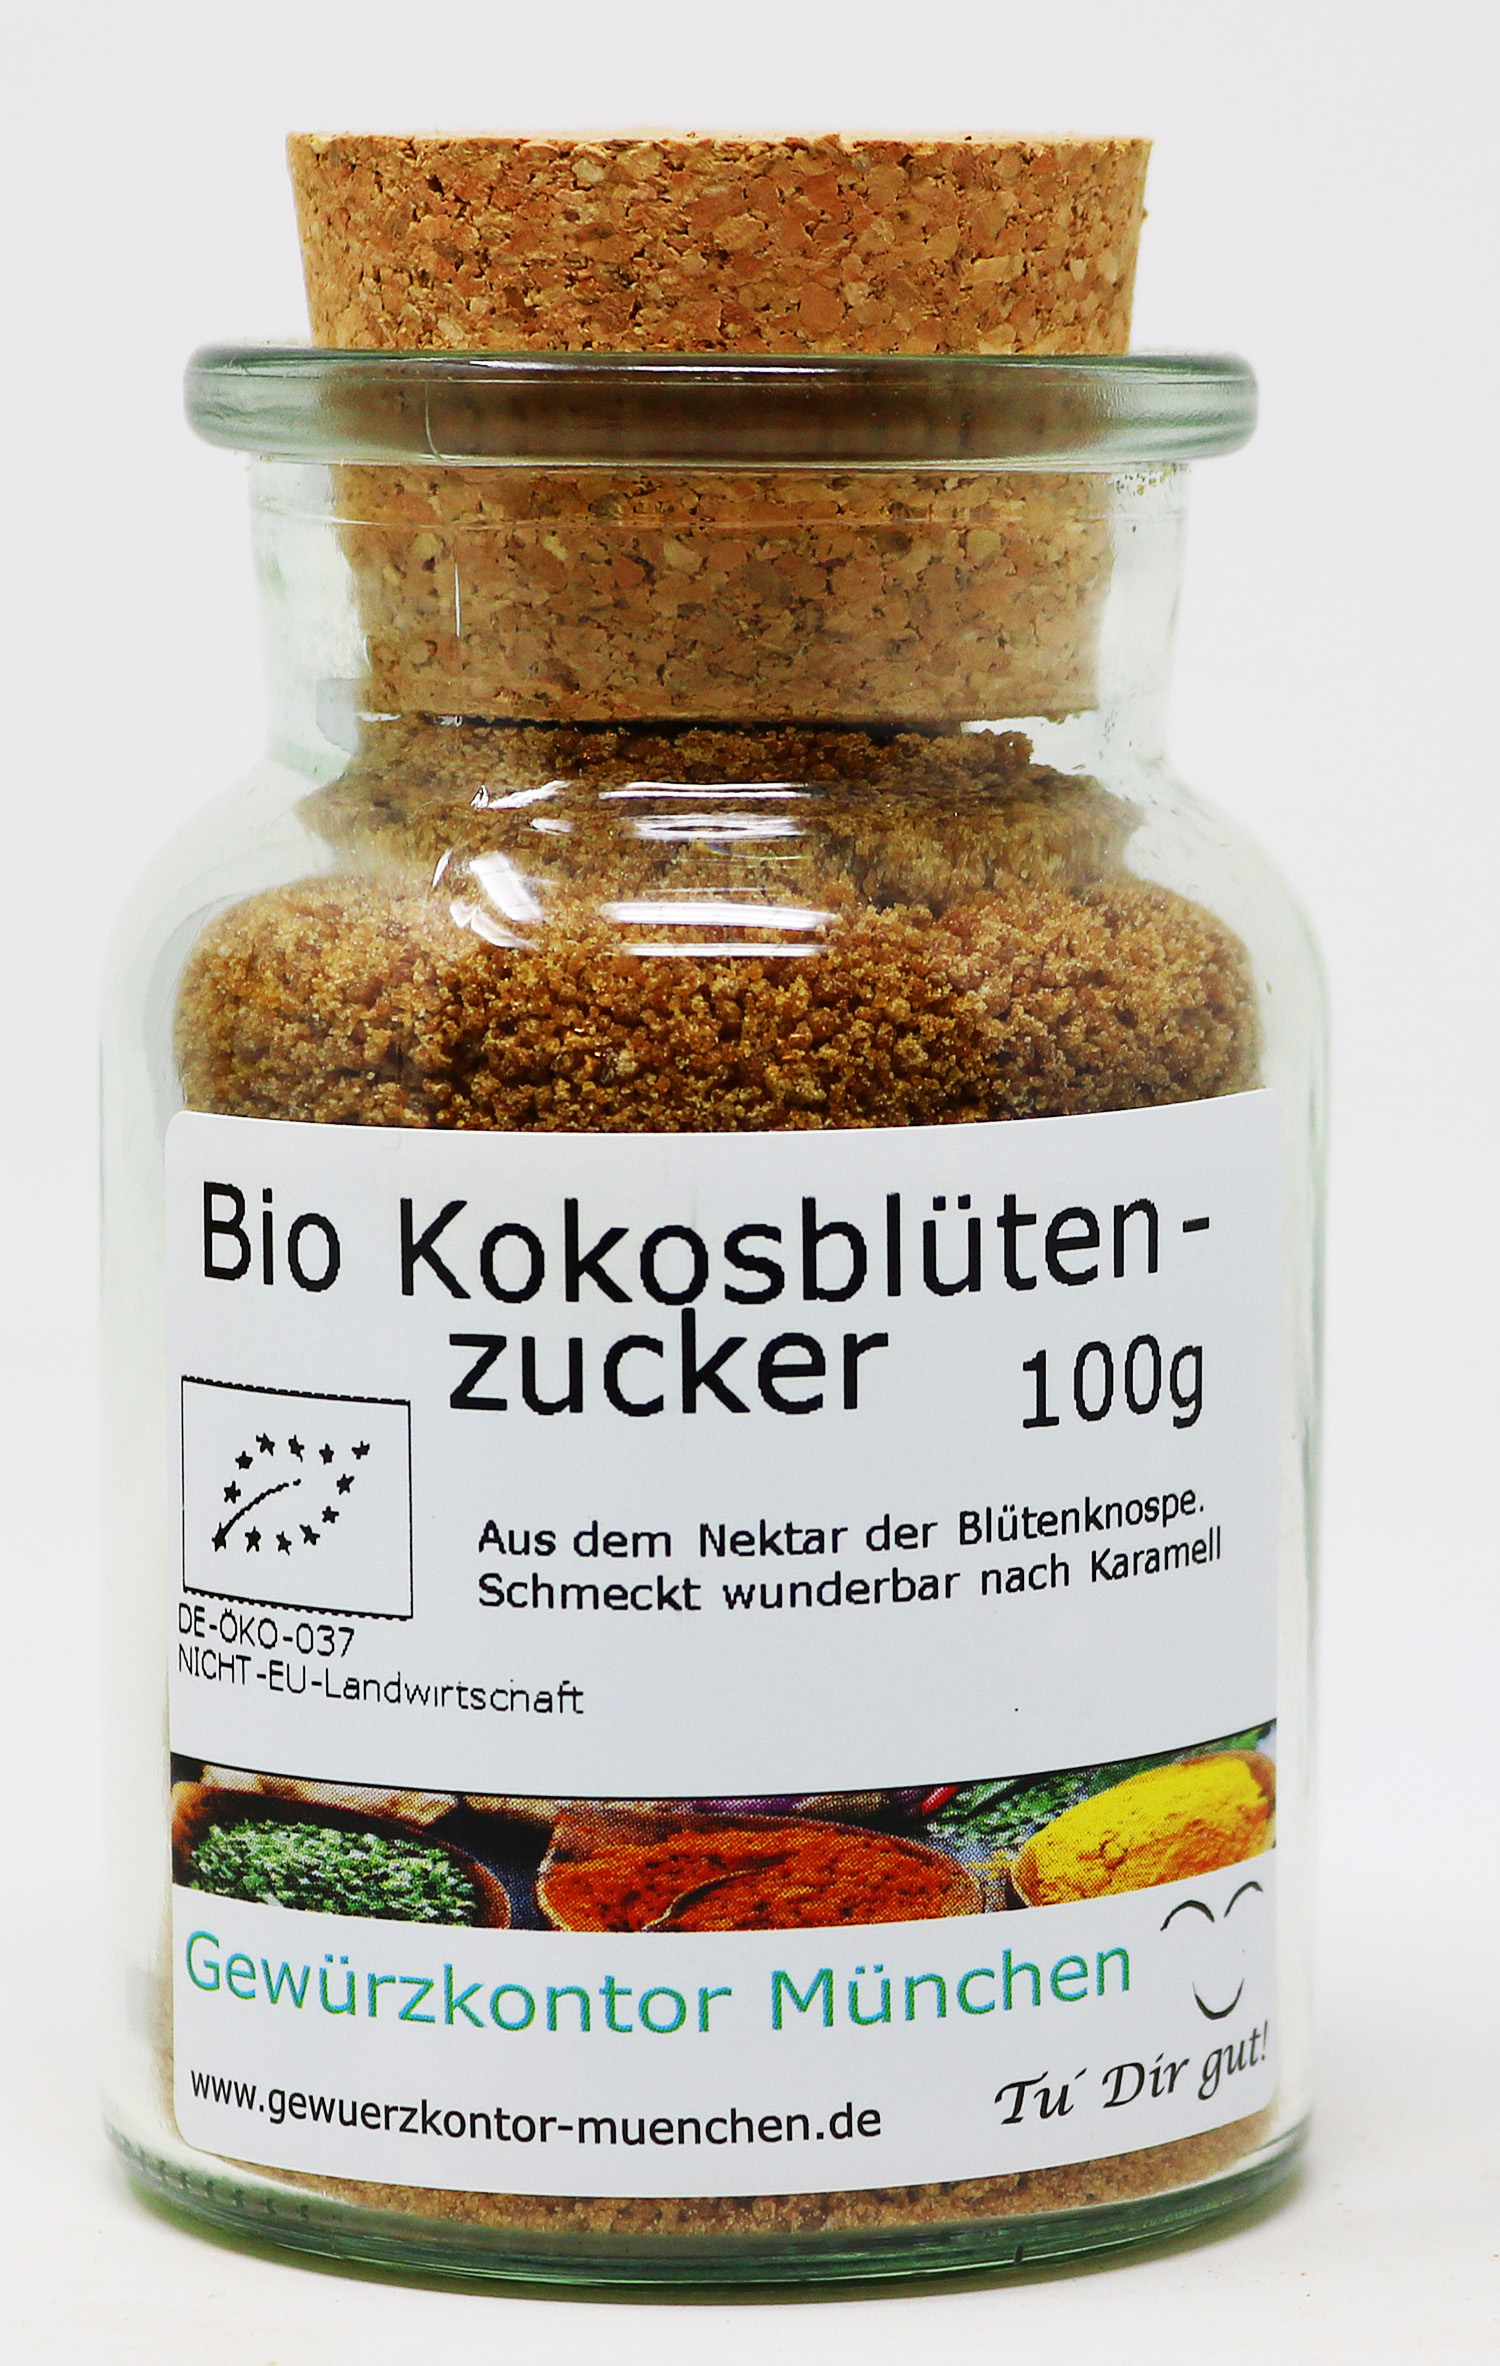 Bio Kokosblütenzucker 100g im Glas